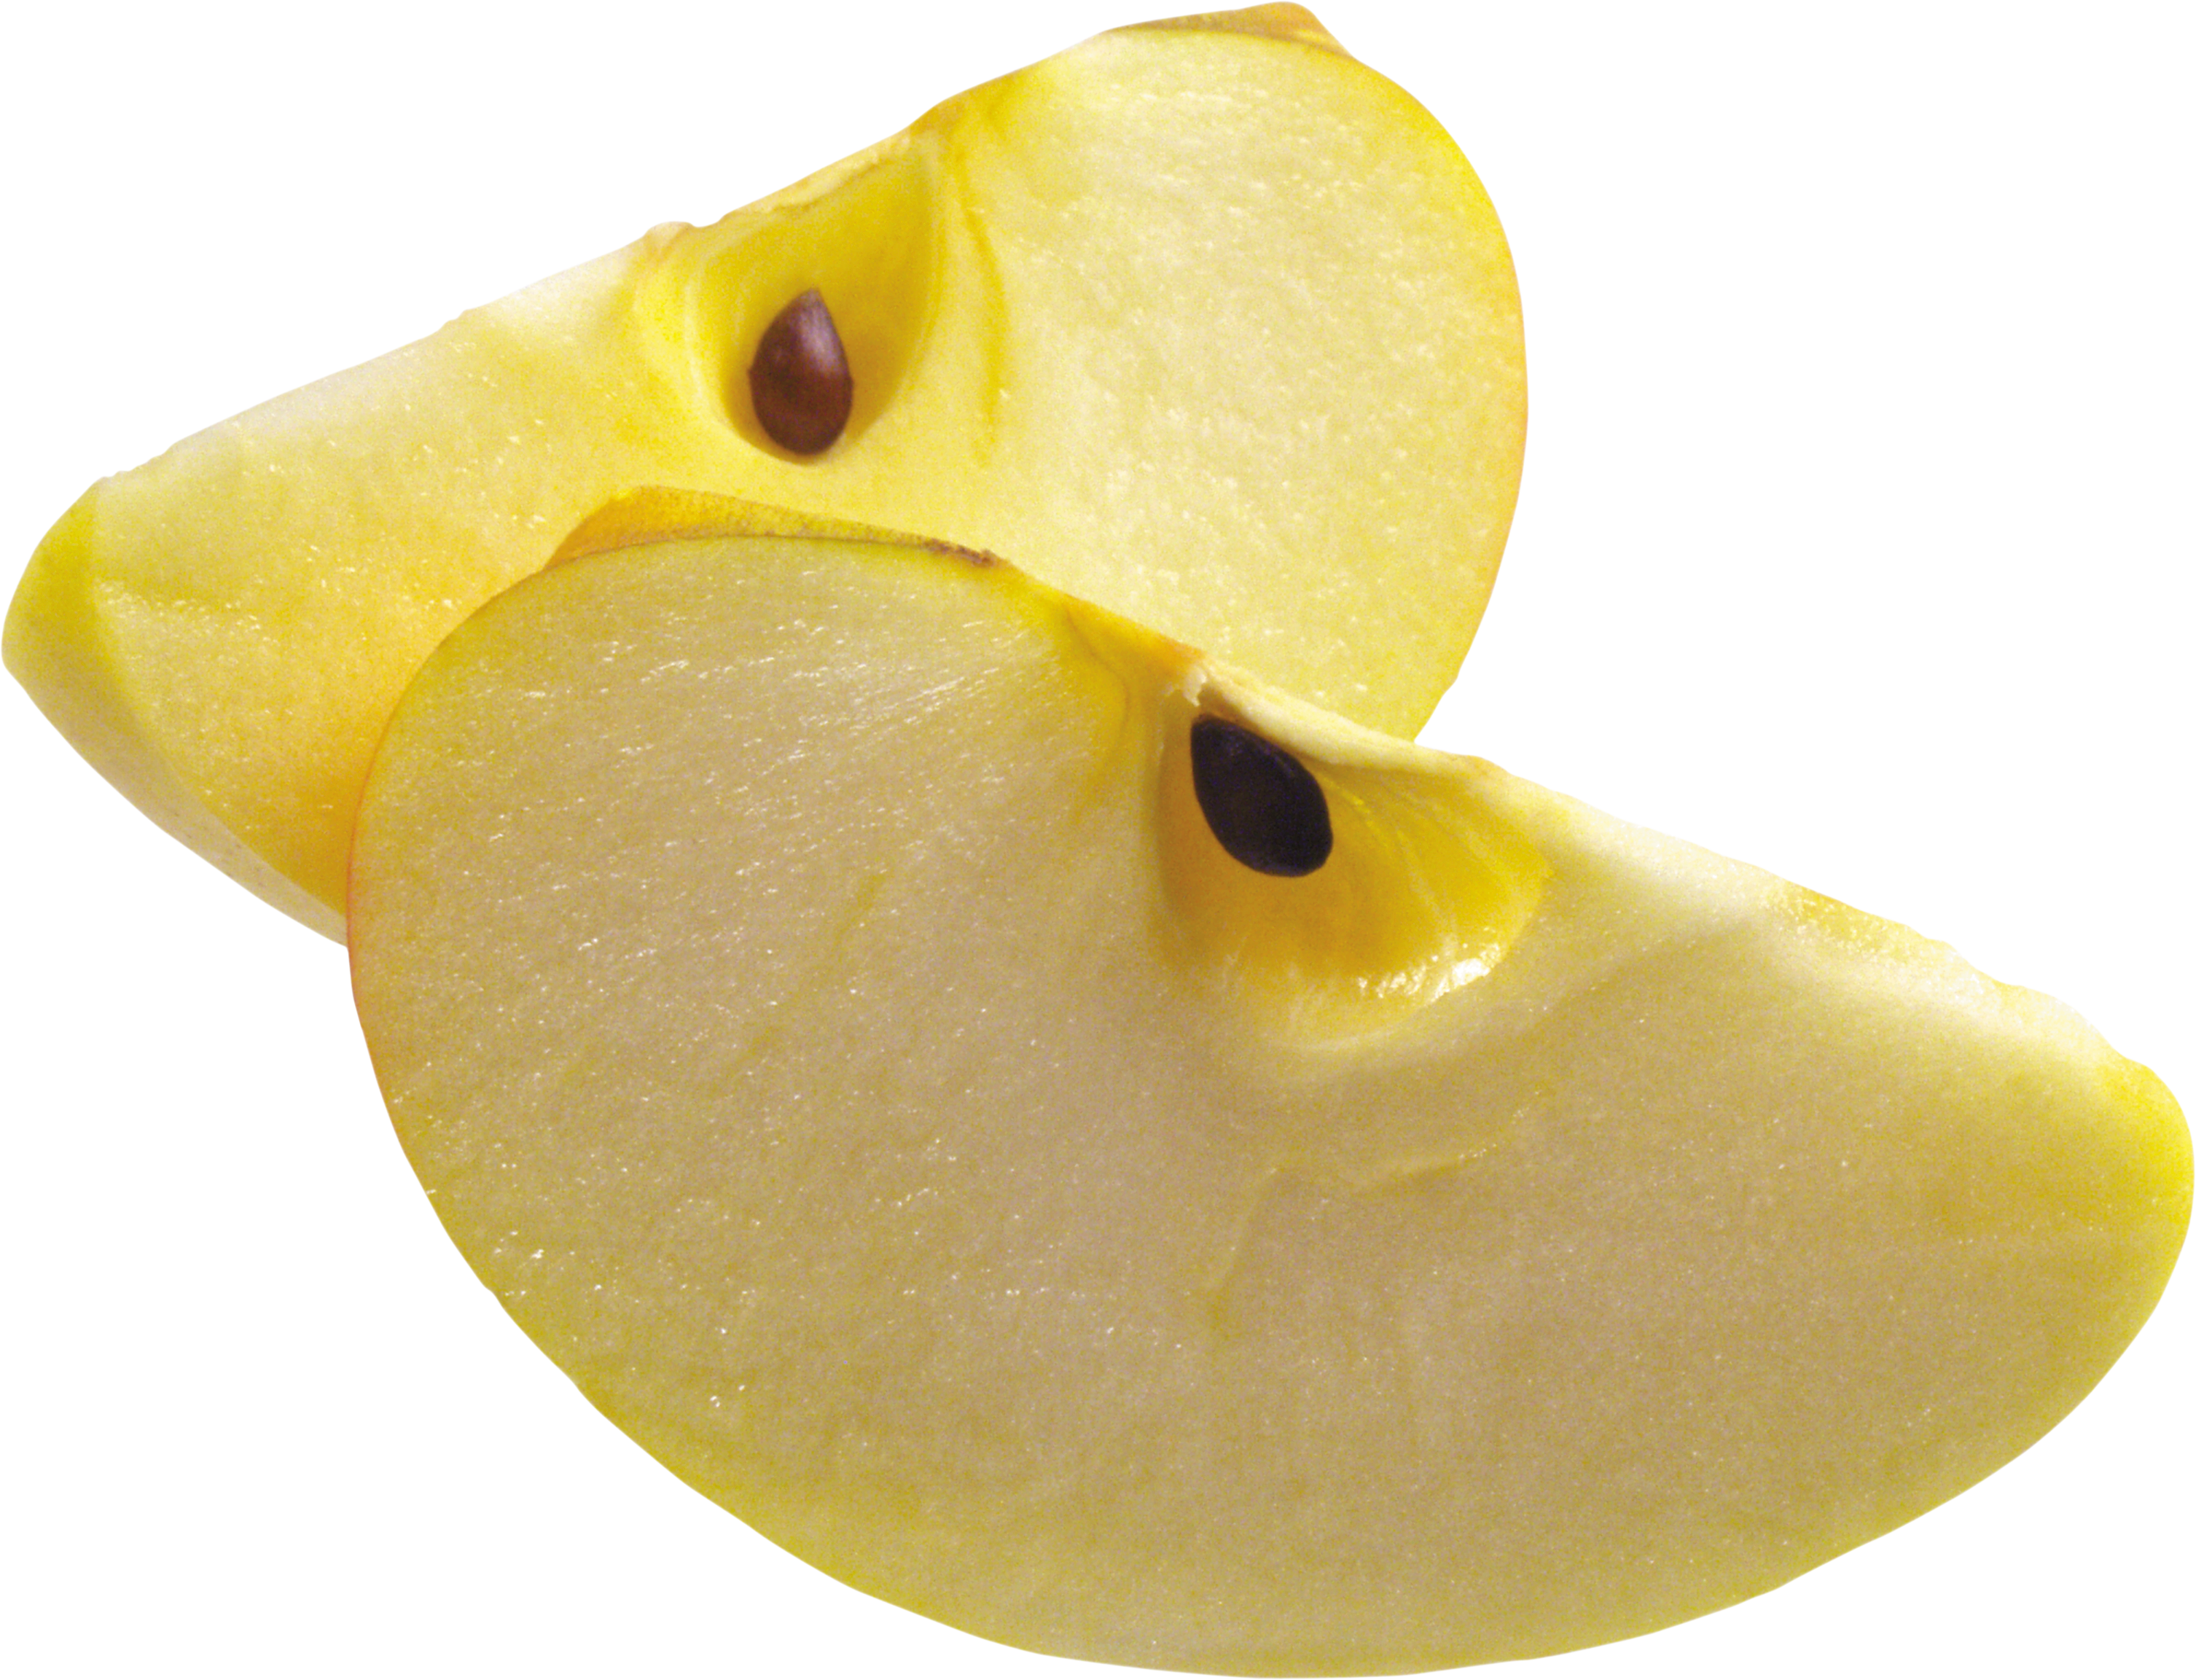 Un pezzo di mela gialla